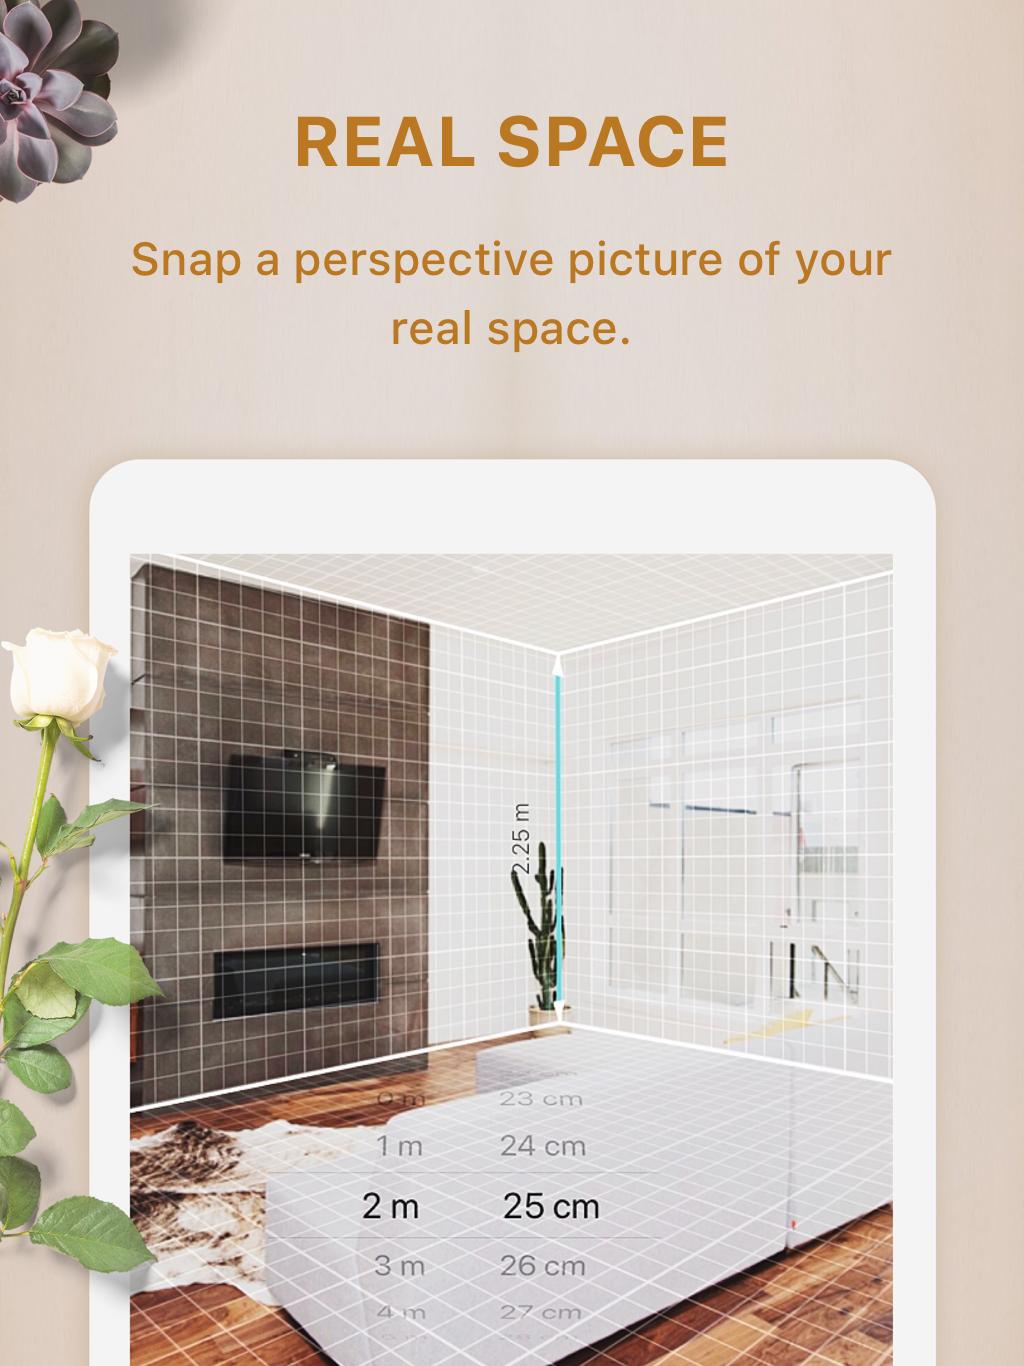 Homestyler Interior Design & Decorating Ideas 4.0.0 Screenshot 16